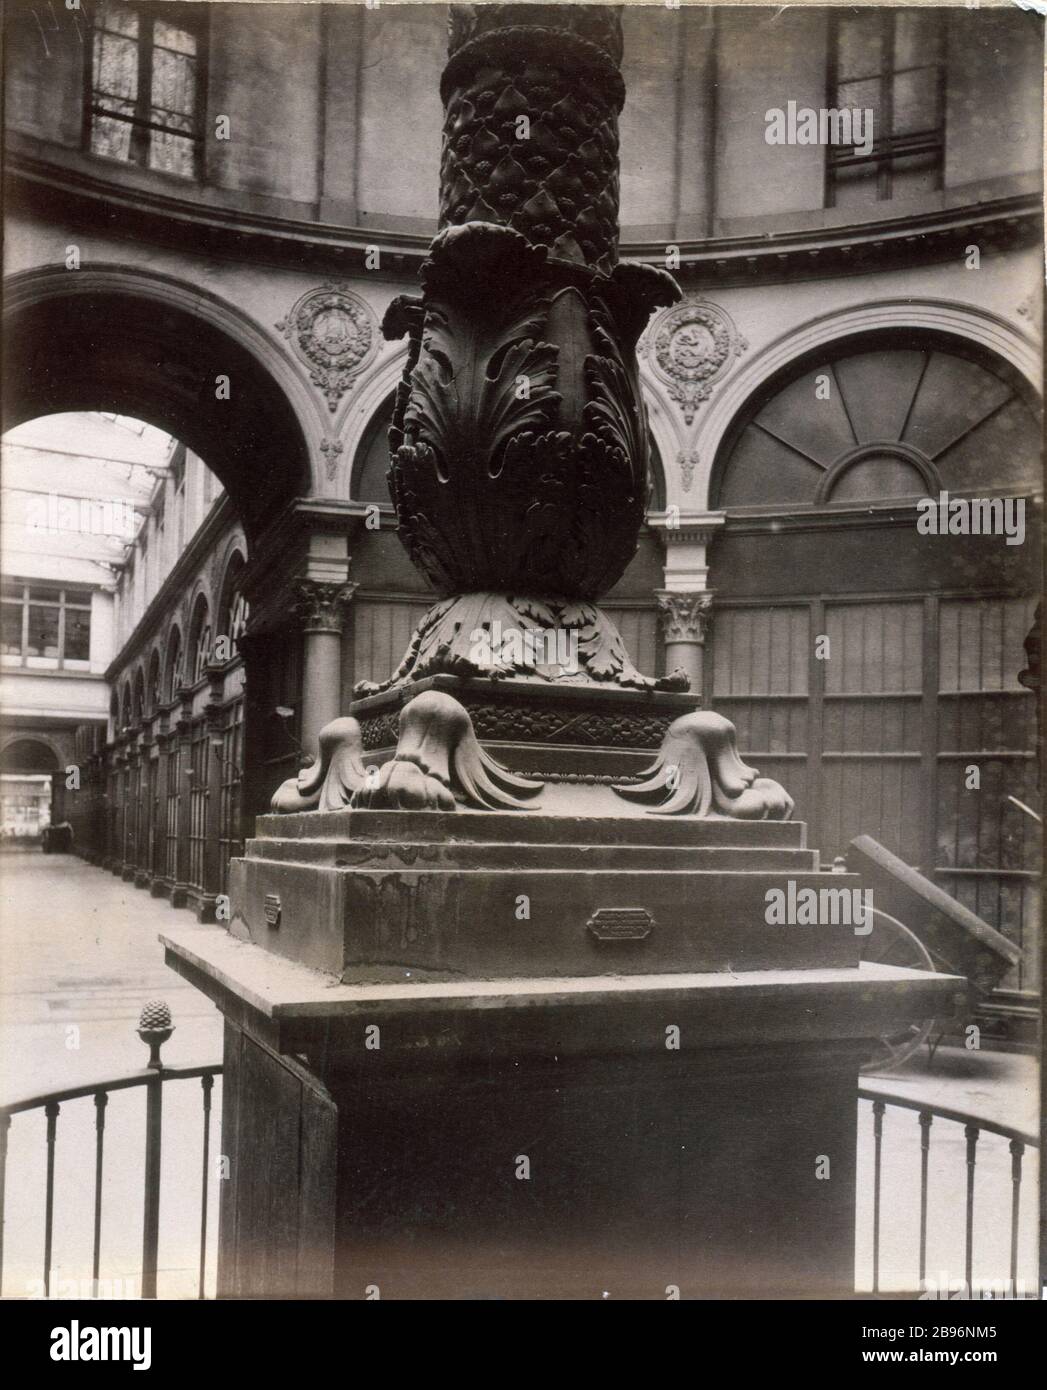 VIVIENNE COLBERT STREET GALLERY 'Galerie Colbert rue Vivienne', Paris (IIème arr.). Photographie d'Eugène Atget (1857-1927), 1906. Paris, musée Carnavalet. Stock Photo